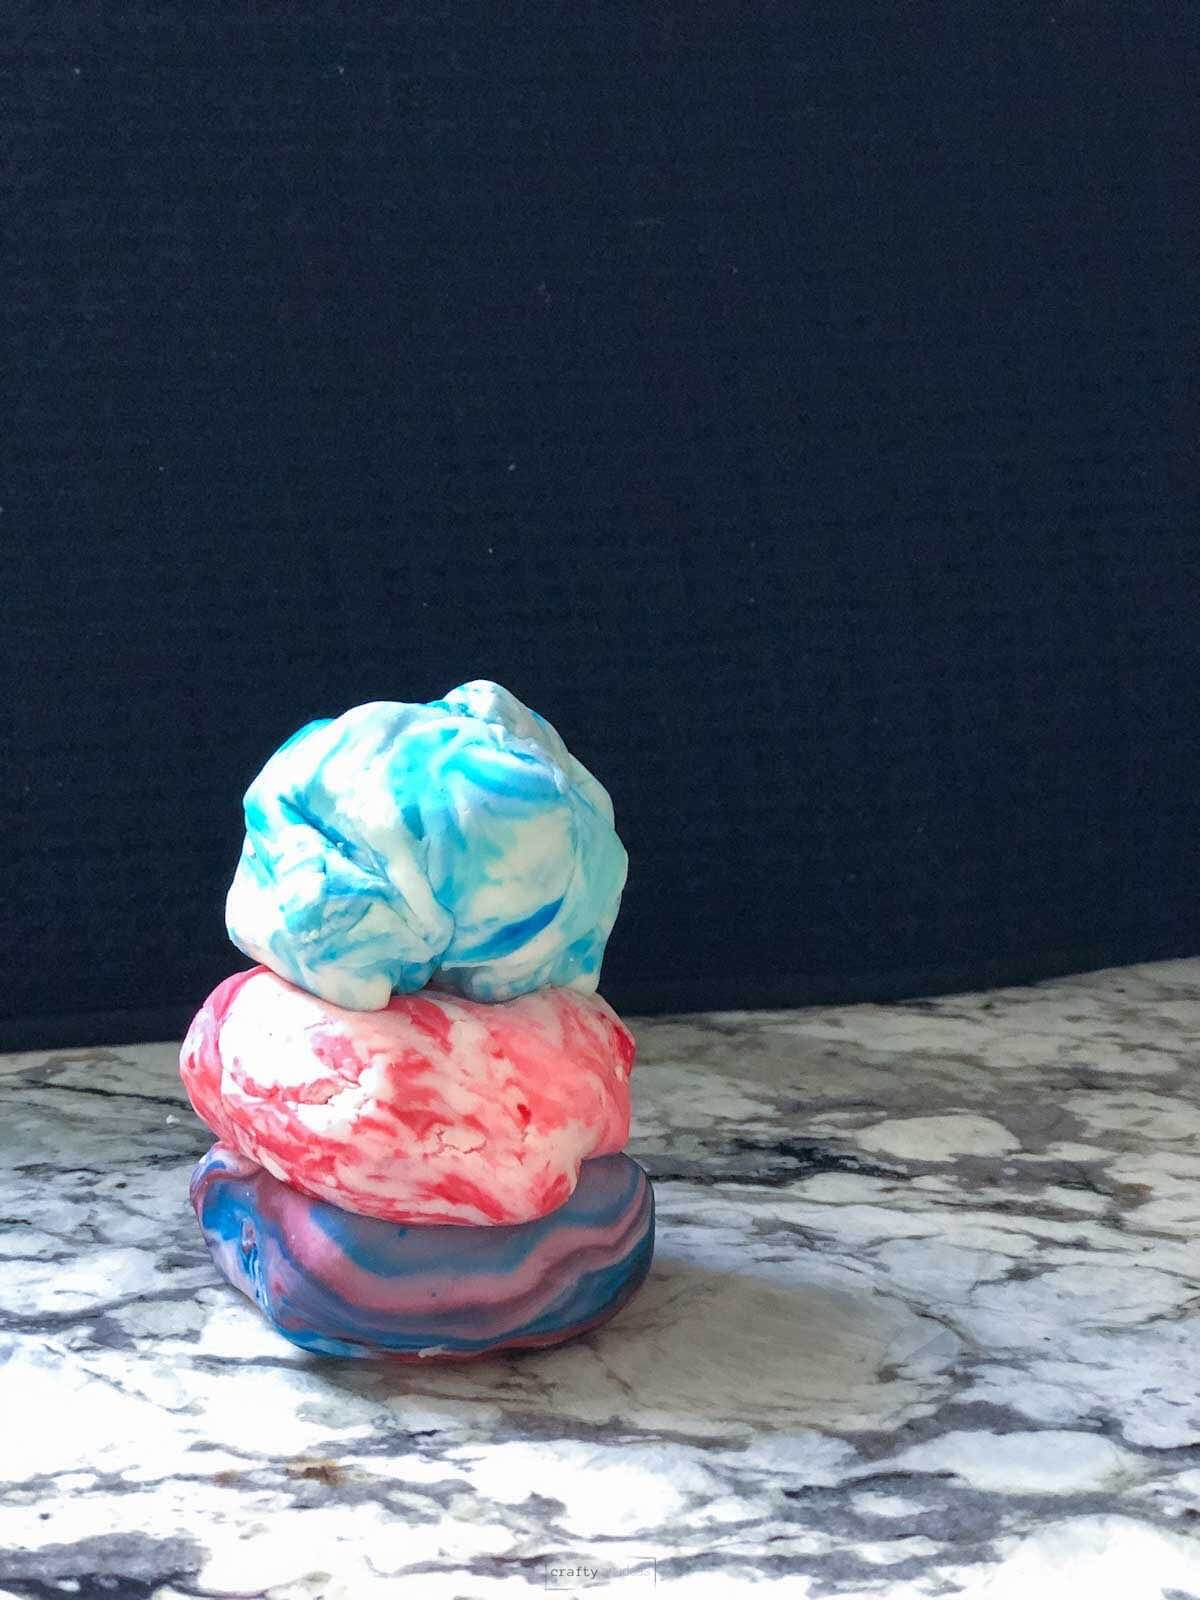 tie dye looking playdough in 3 balls on counter top.